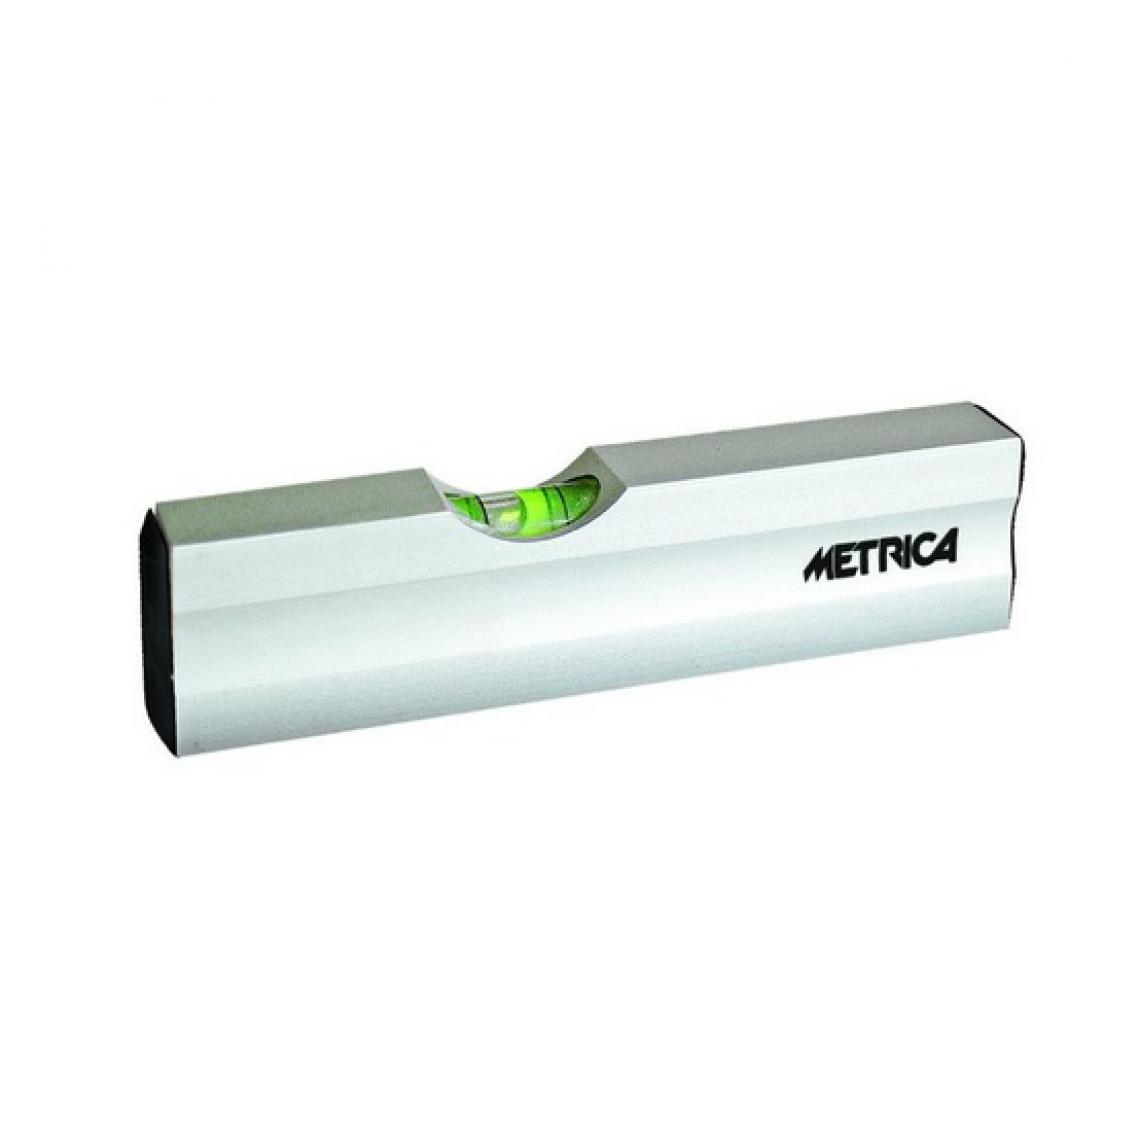 Metrica - Metrica - Mini niveau de poche 1 fiole 100 mm - 31021 - Niveaux lasers